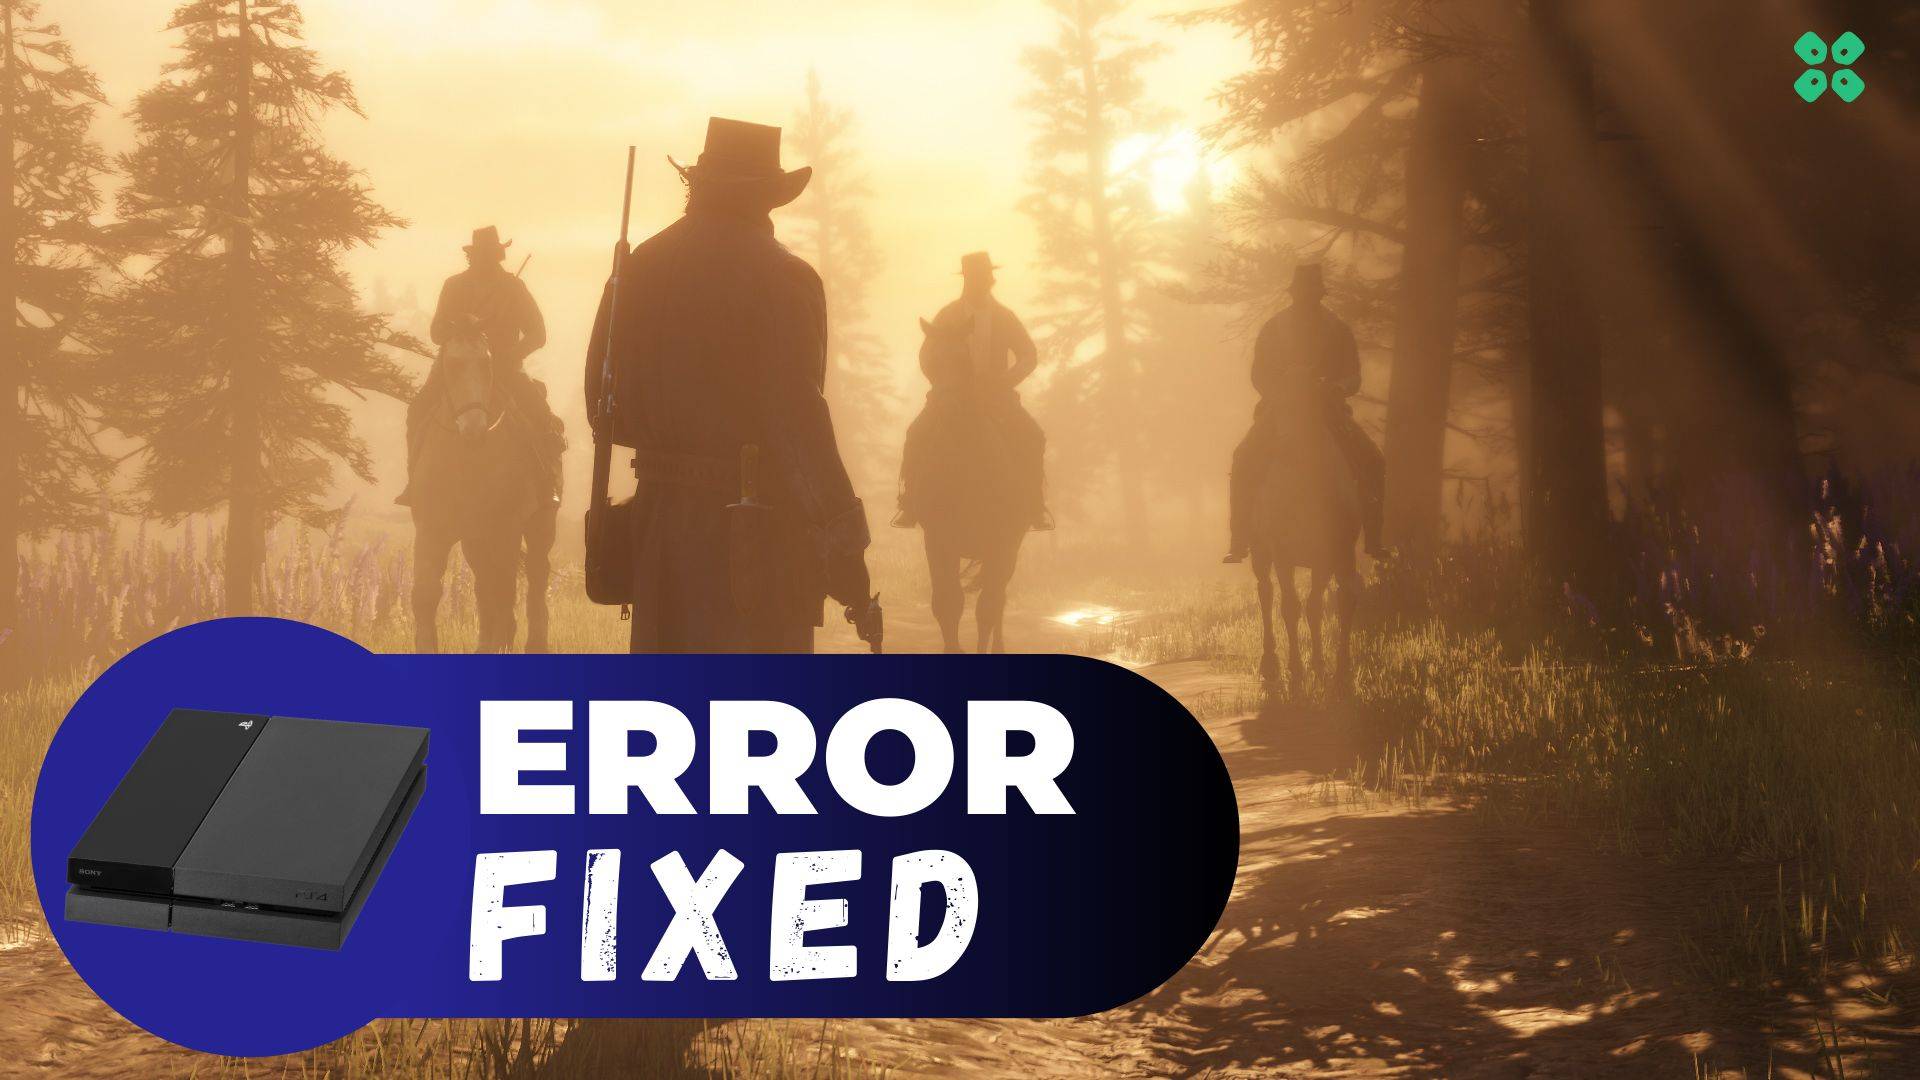 Red Dead Redemption 2 Crashing: Quickly Fix It in 3 Ways